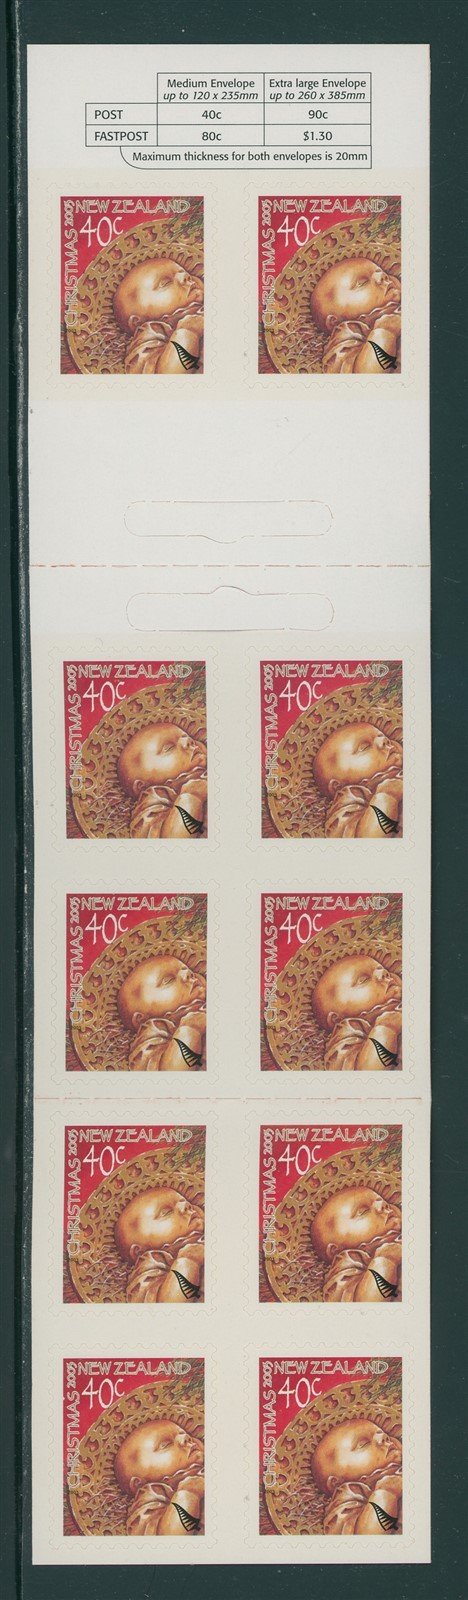 New Zealand Scott #1895a SA BOOKLET PANE of 10 Christmas 2003 40c CV$6+